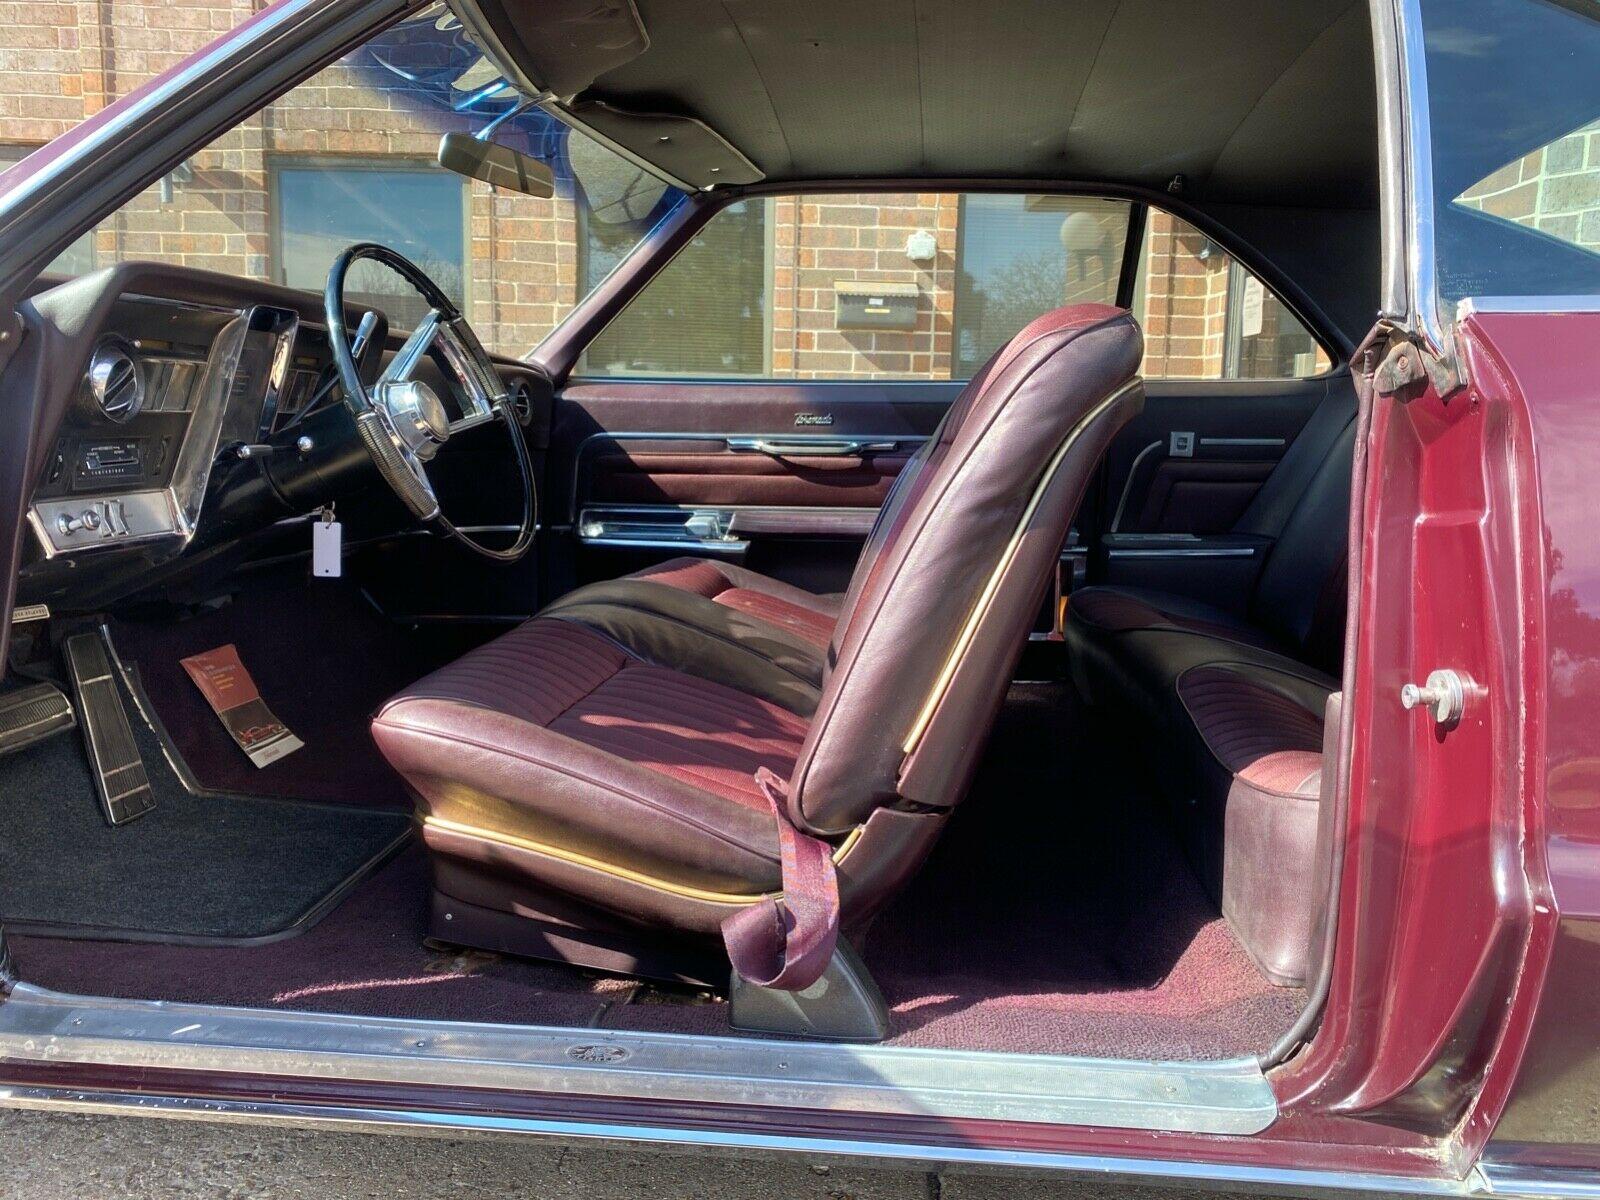 1966 Oldsmobile Toronado Deluxe For Sale 2022 04 03 13 